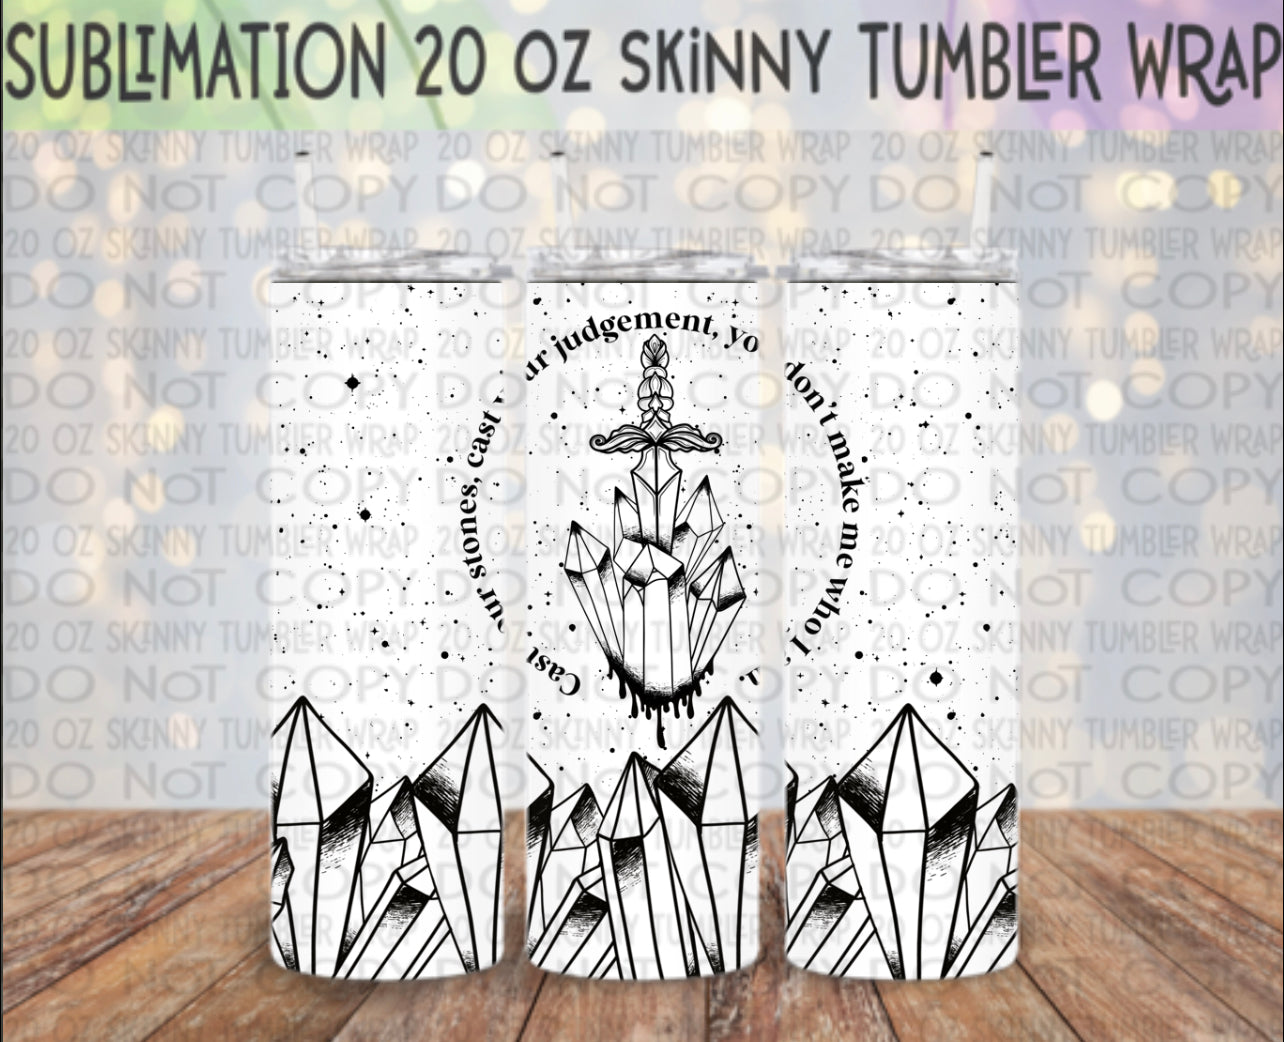 Cast Your Stones 20 Oz Skinny Tumbler Wrap - Sublimation Transfer - RTS